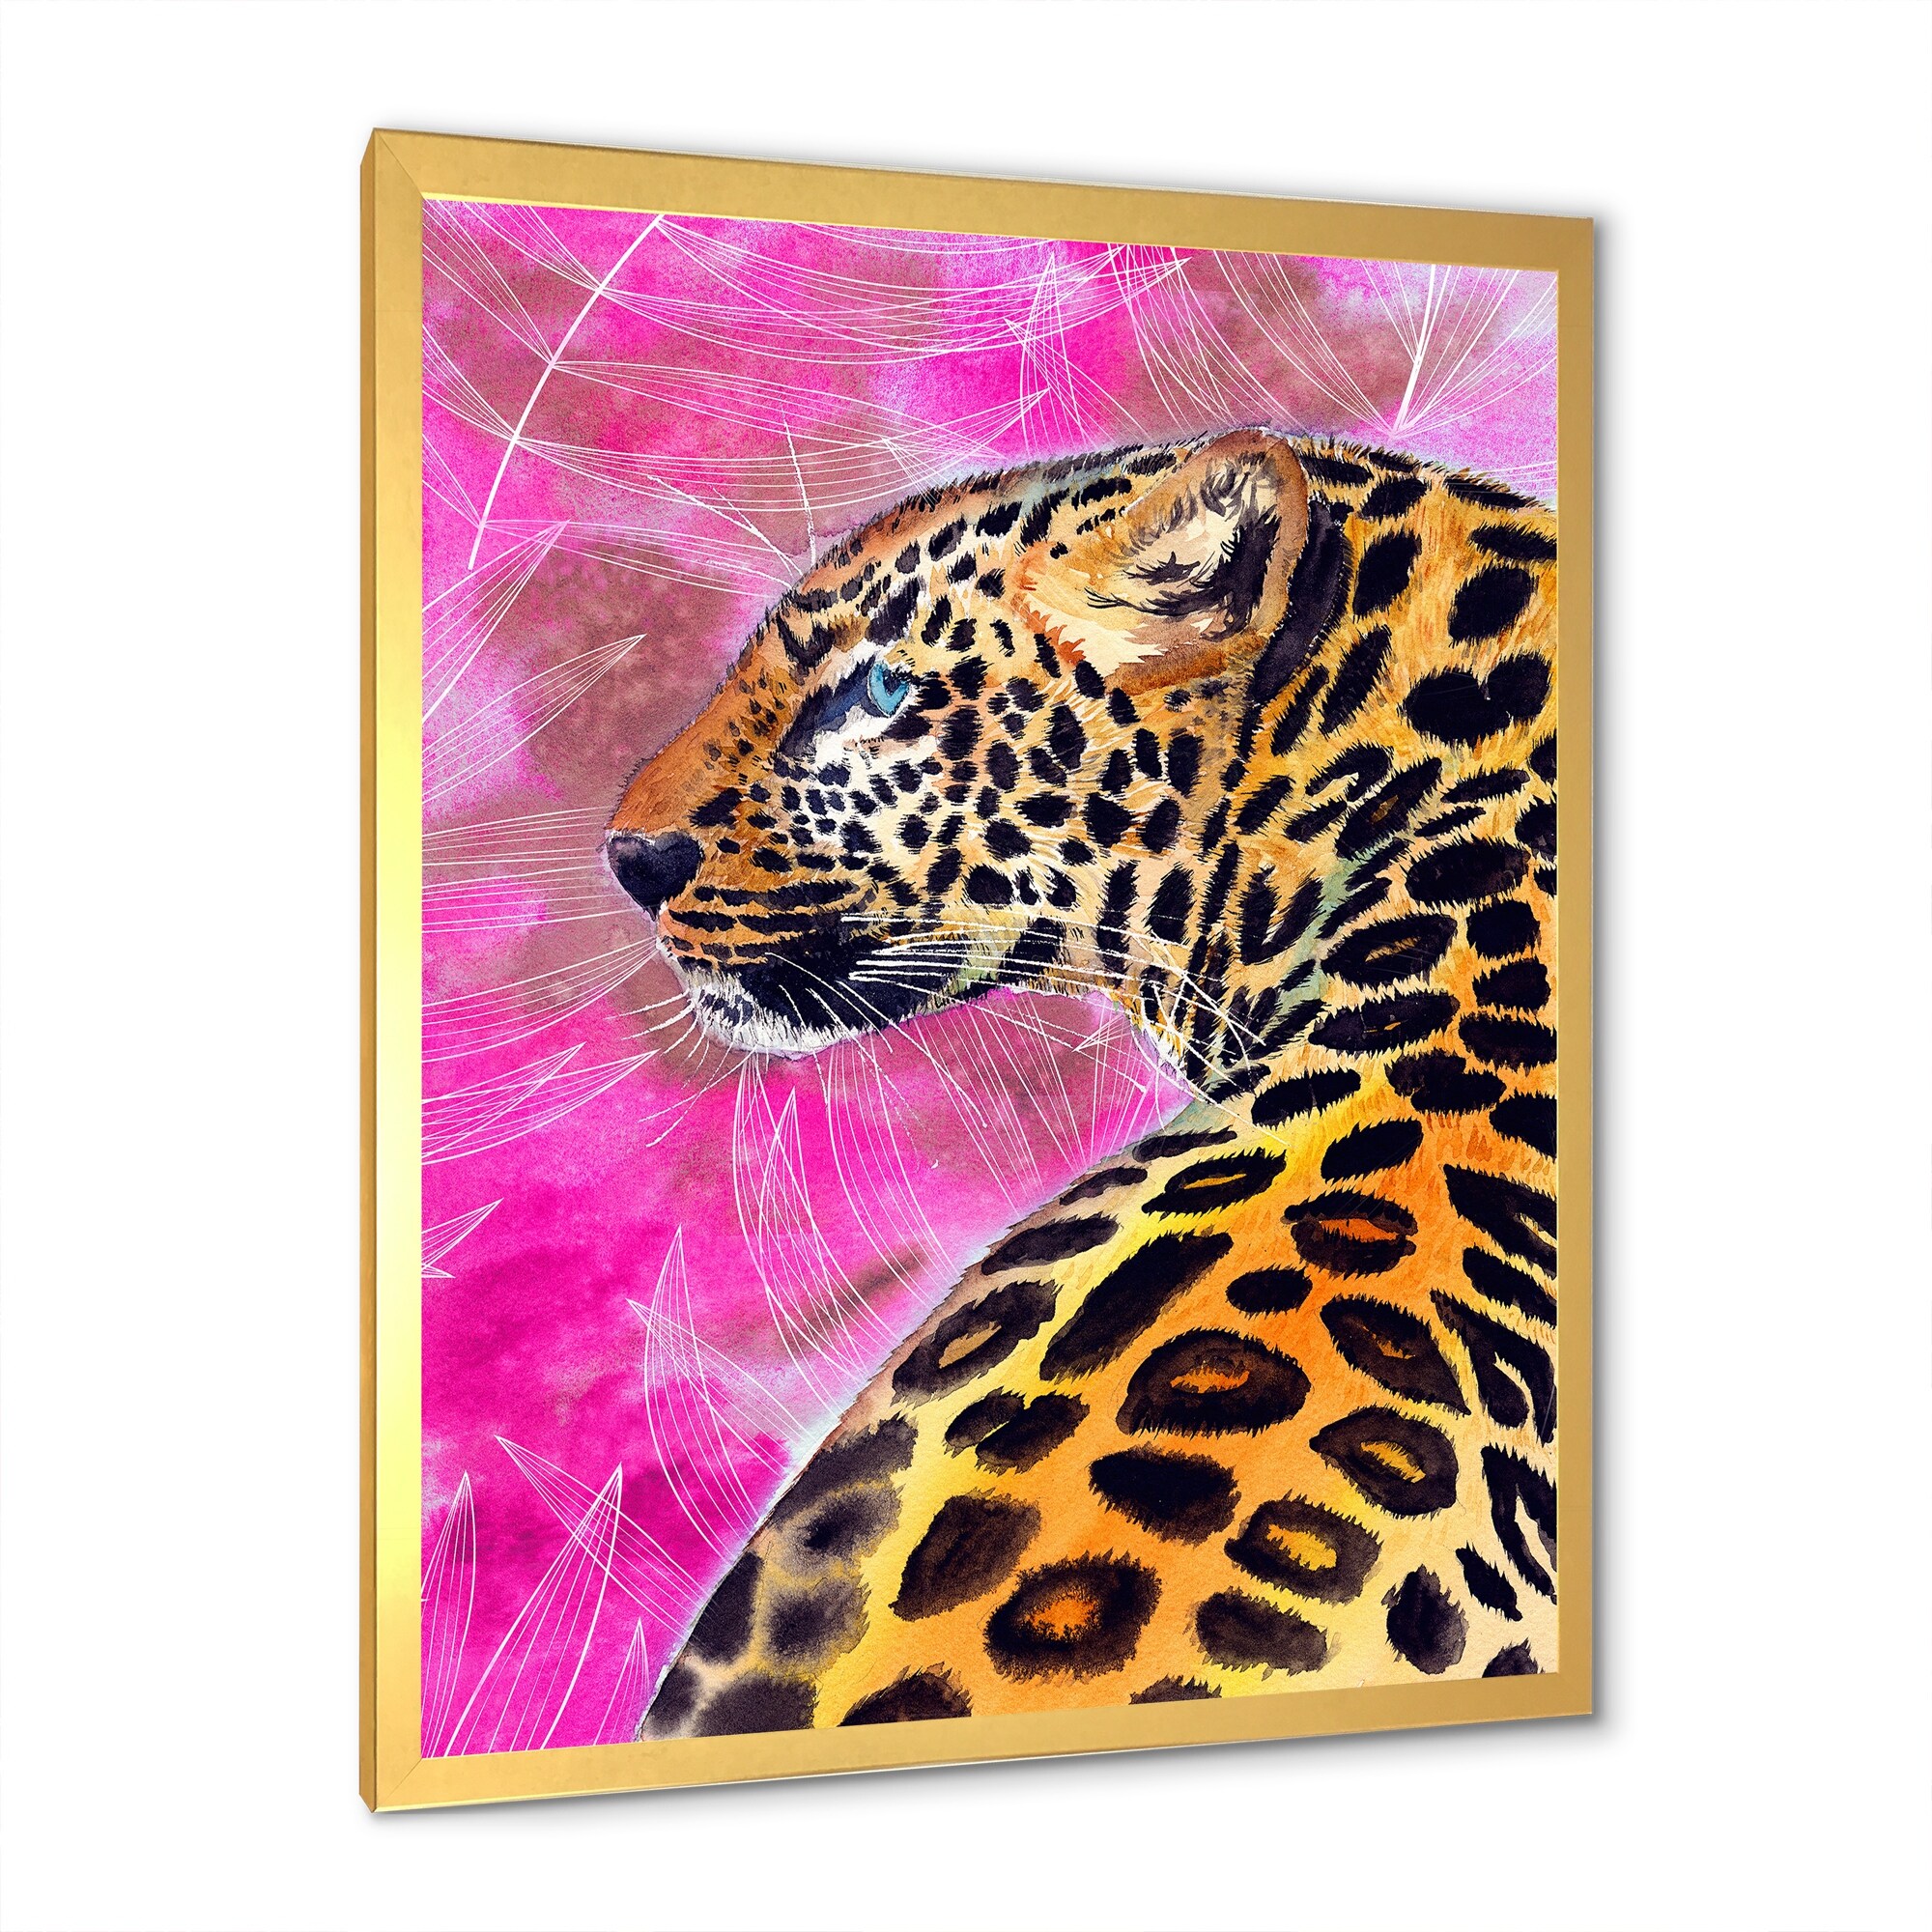 Animal Print Wallpaper Shades Leopard Jaguar Spots Black White Silver